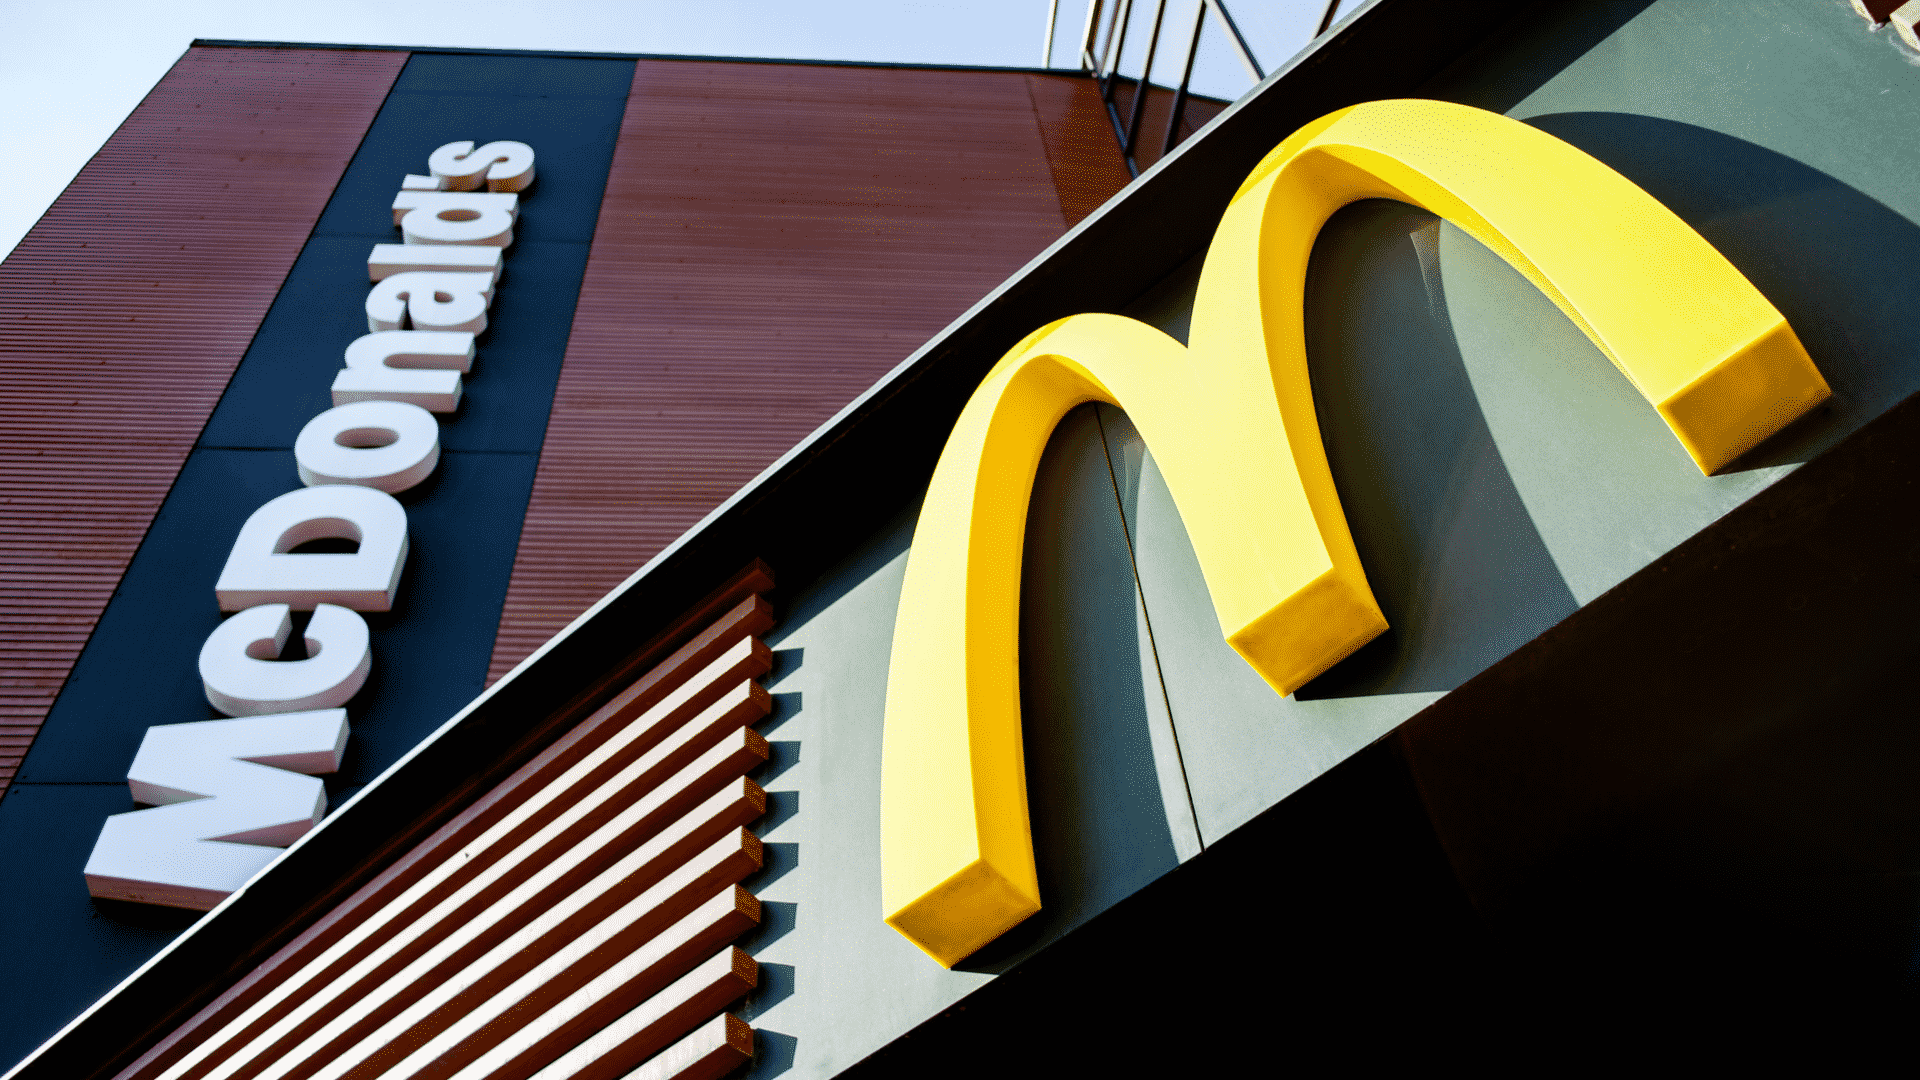 McDonald’s sells Dynamic Yield to Mastercard